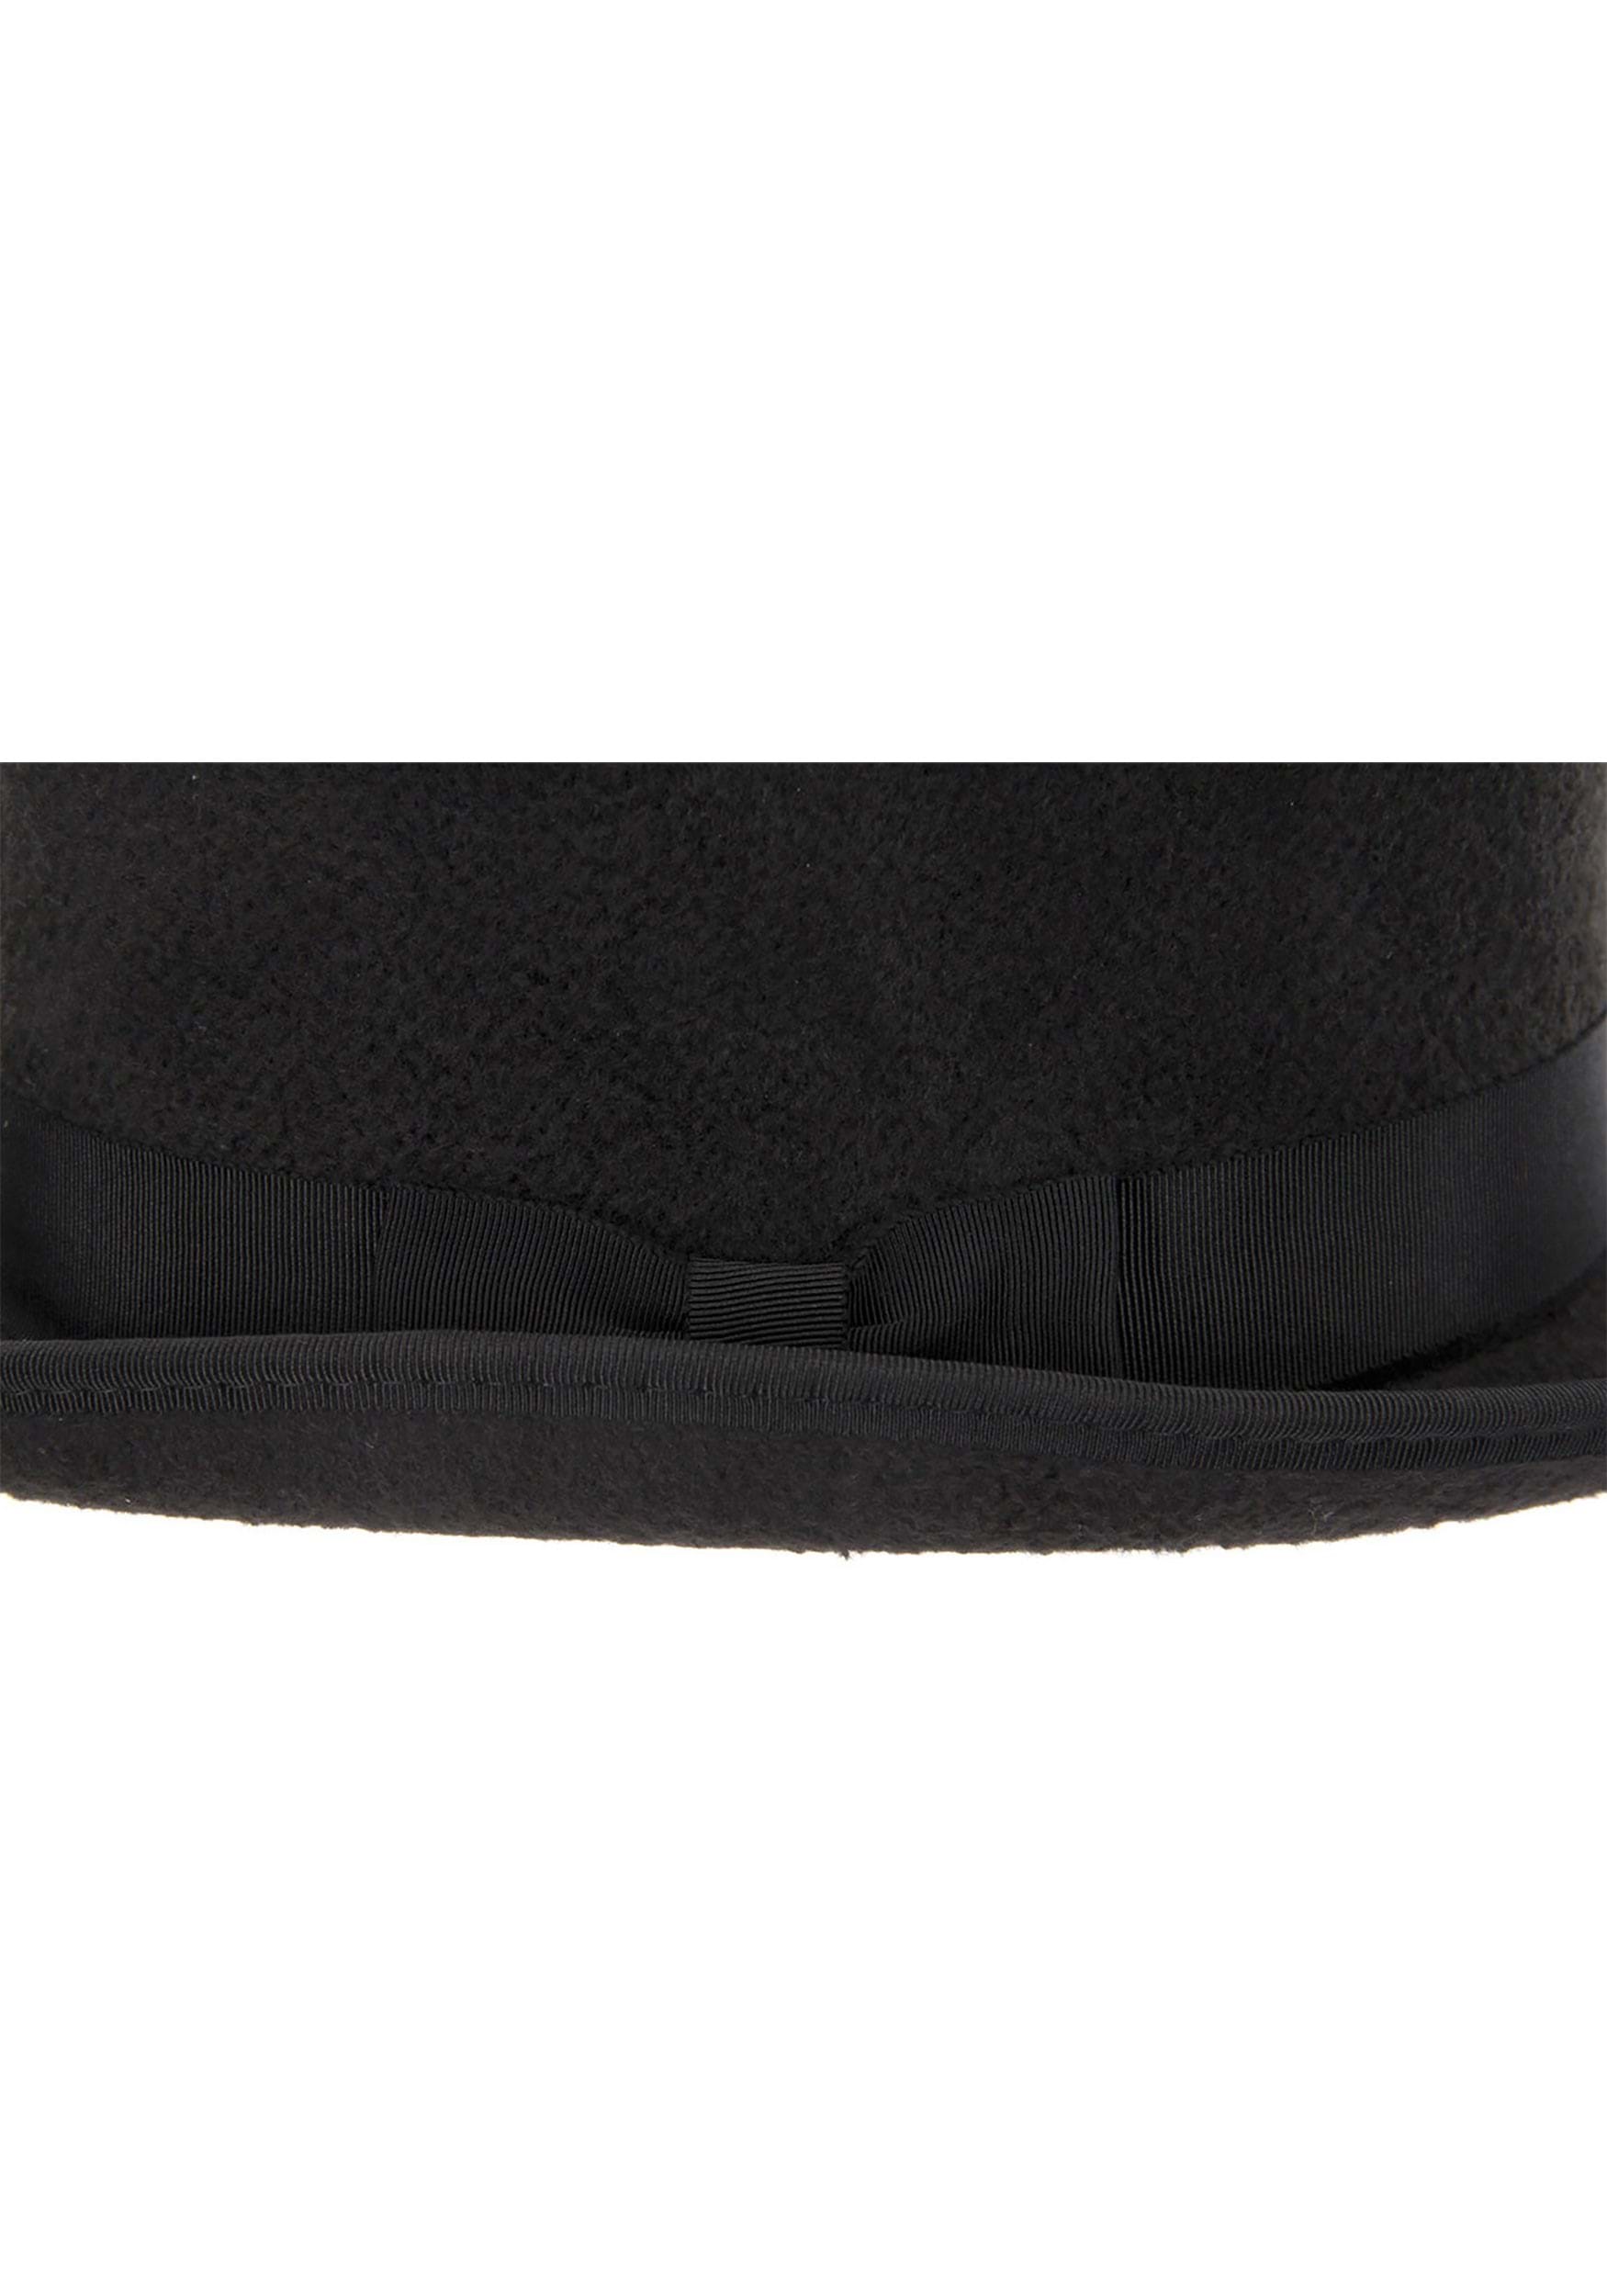 Adult Black John Bull Fancy Dress Costume Hat , Fancy Dress Costume Party Hats